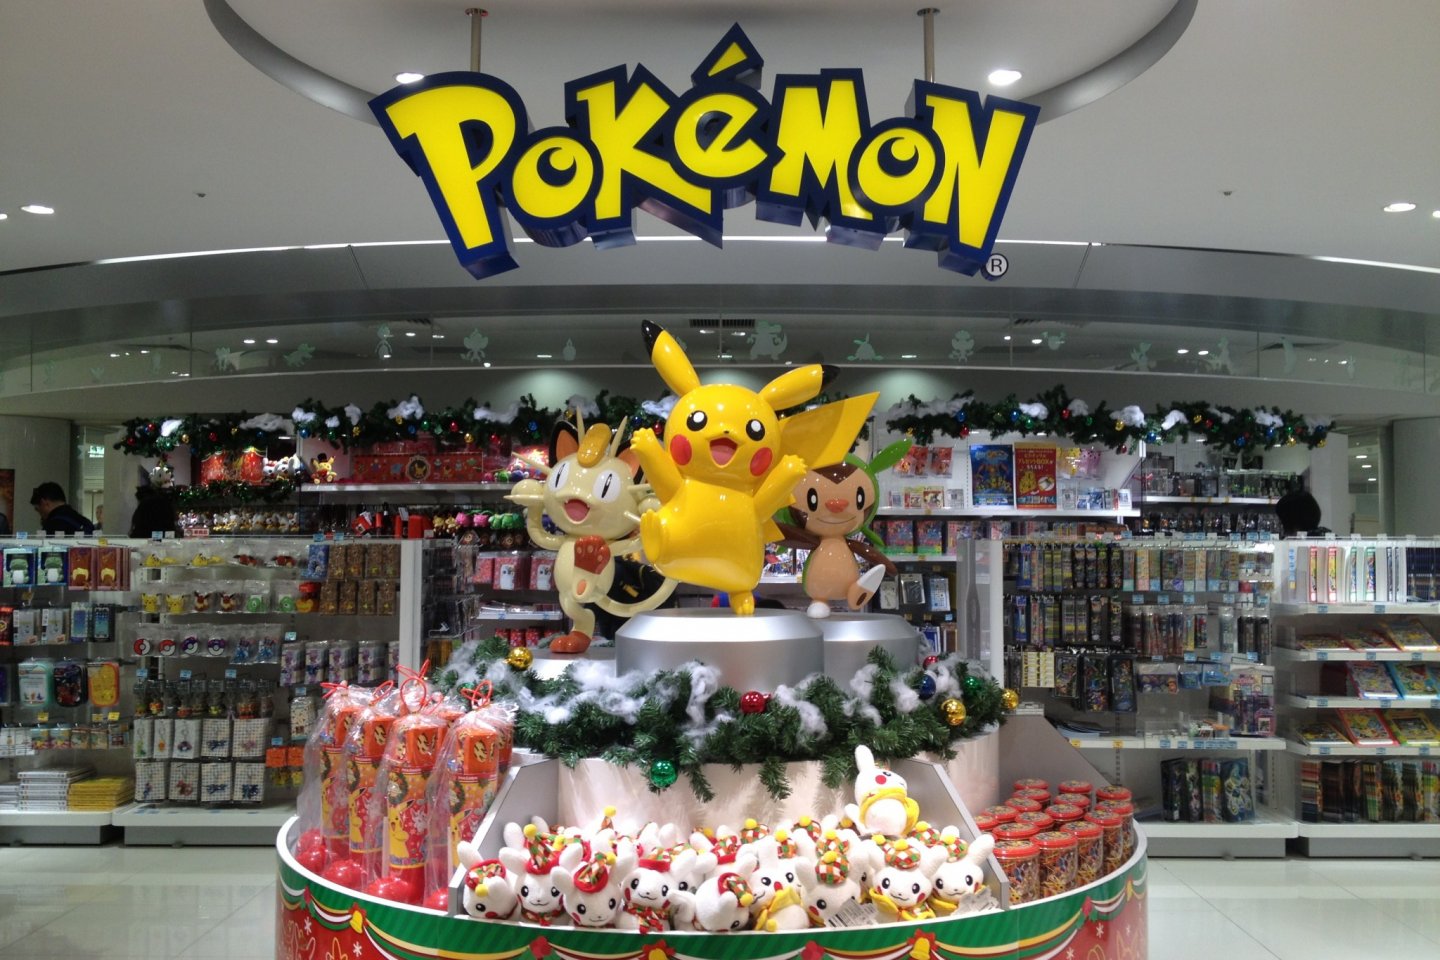 Pusat Pokemon Osaka - Osaka - Japan Travel